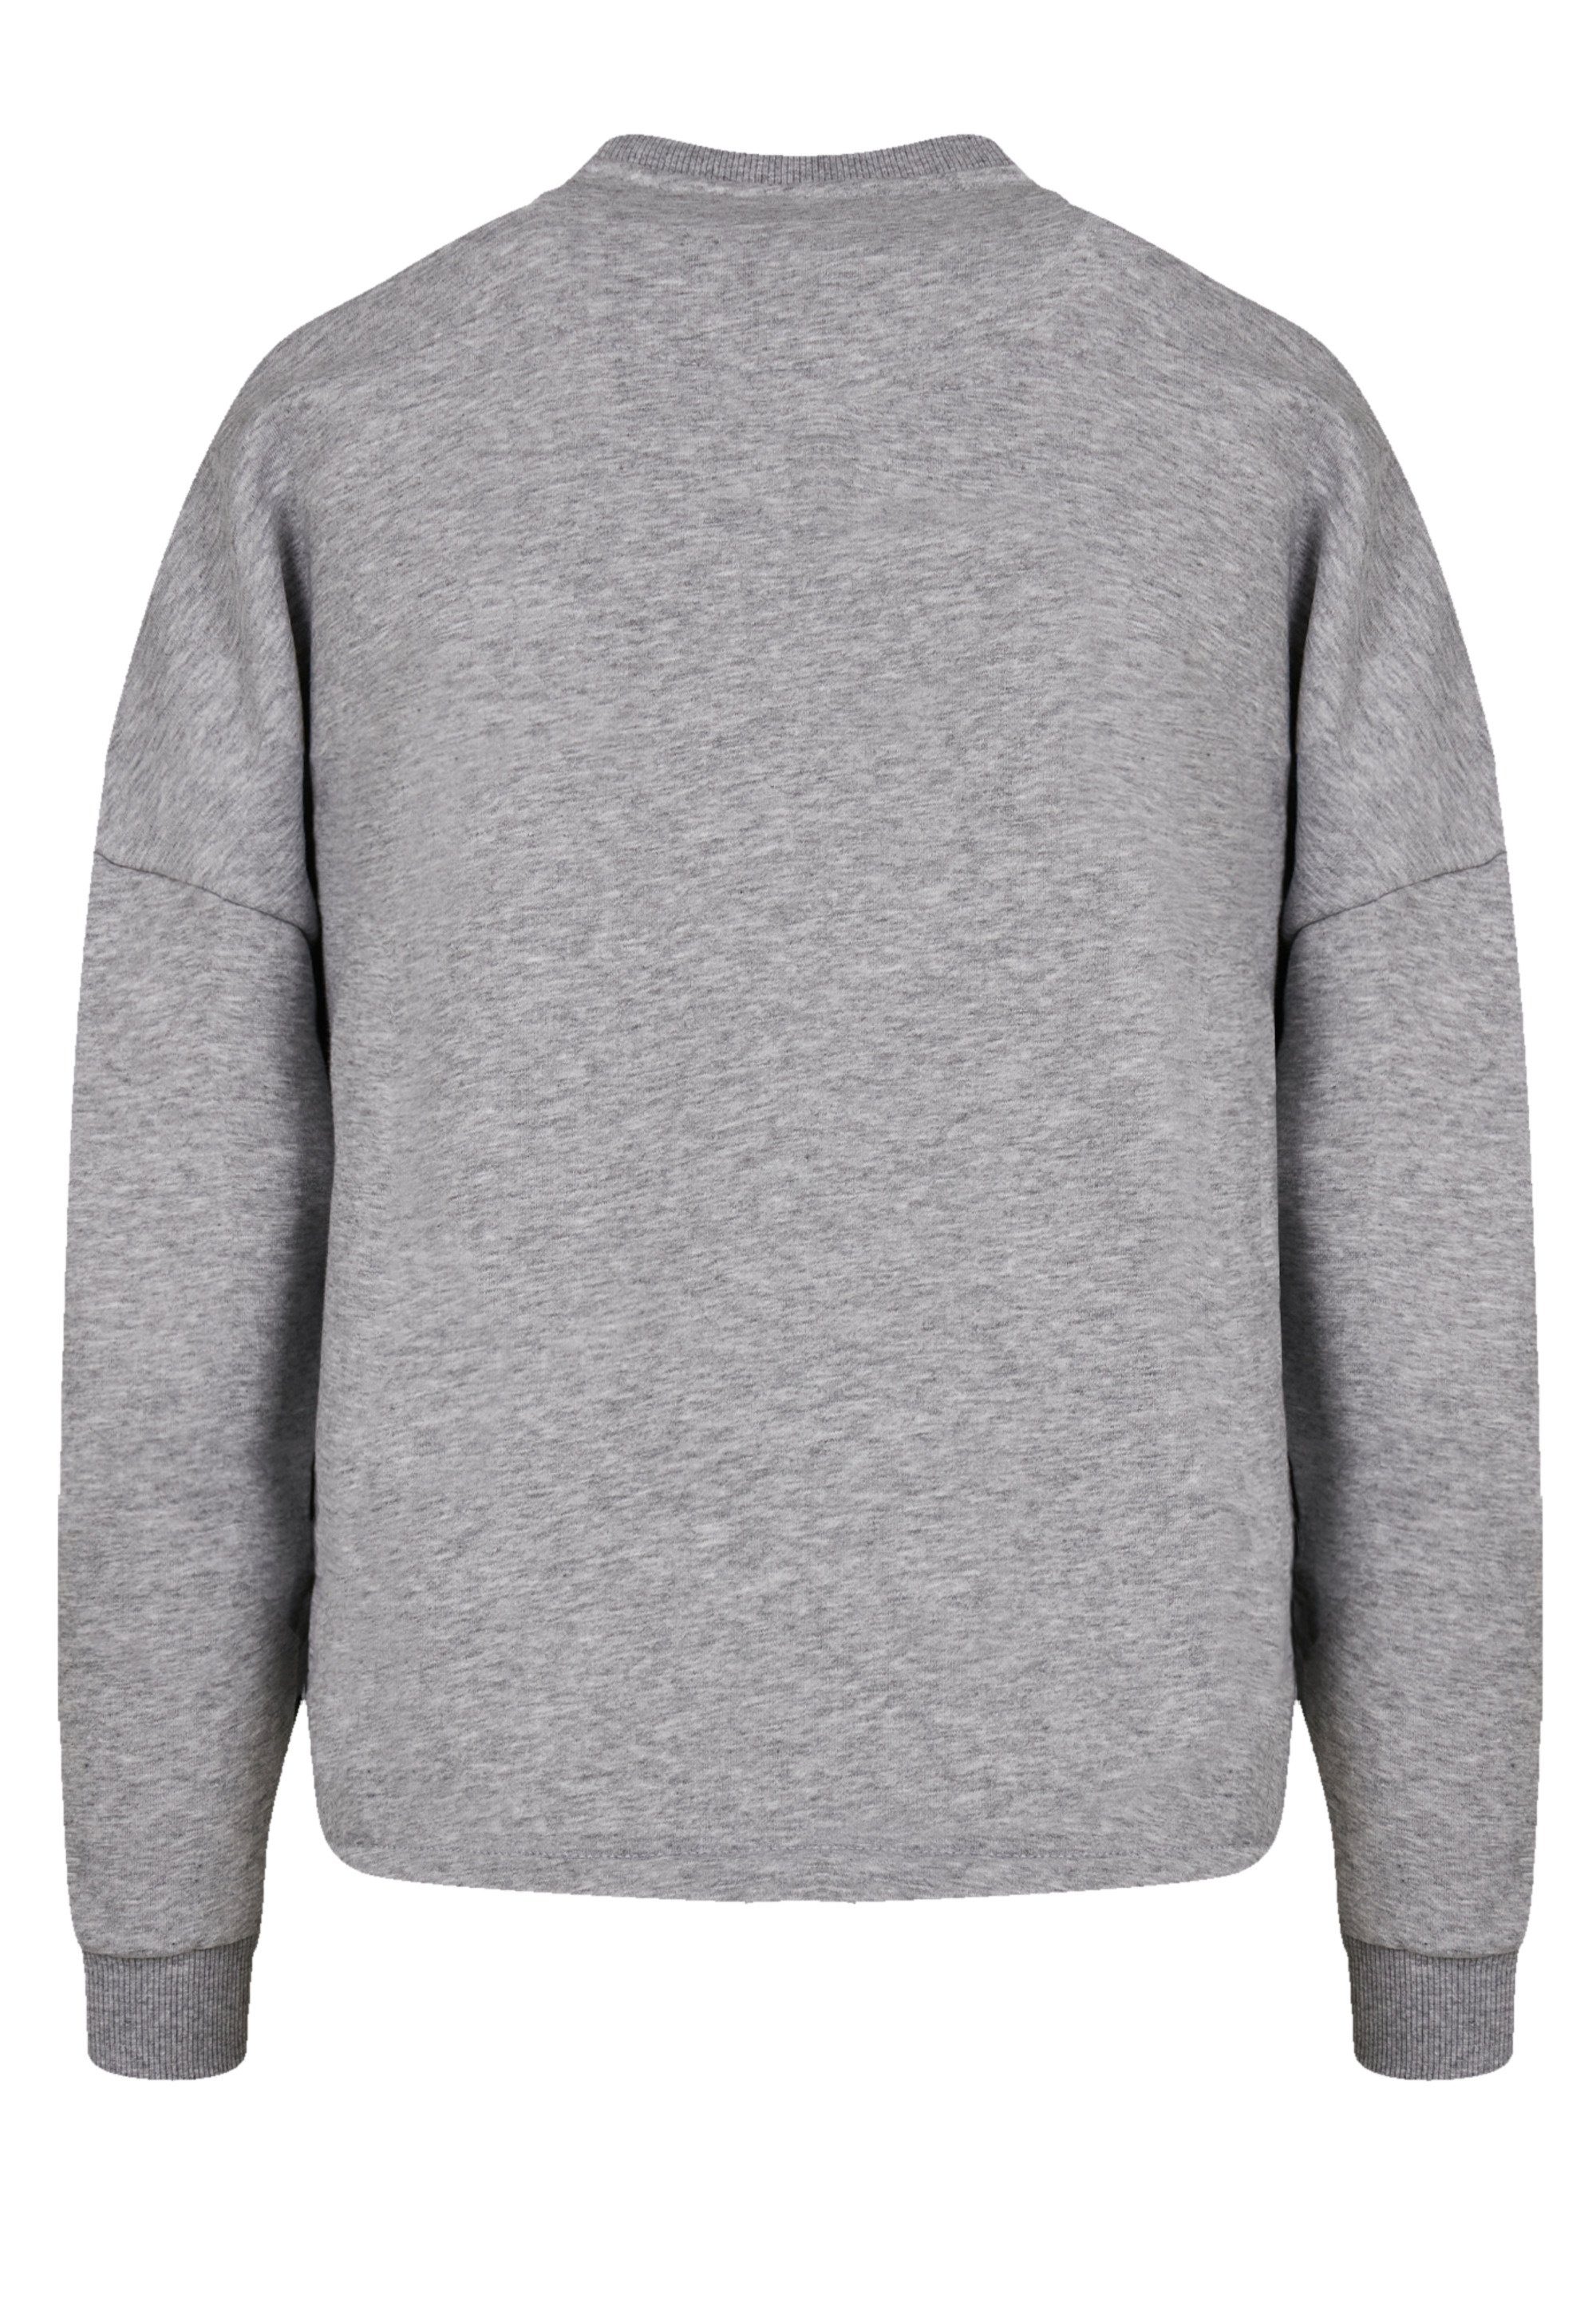 Pinguin Jan Hamburg grey heather Sweatshirt & Knut F4NT4STIC Print